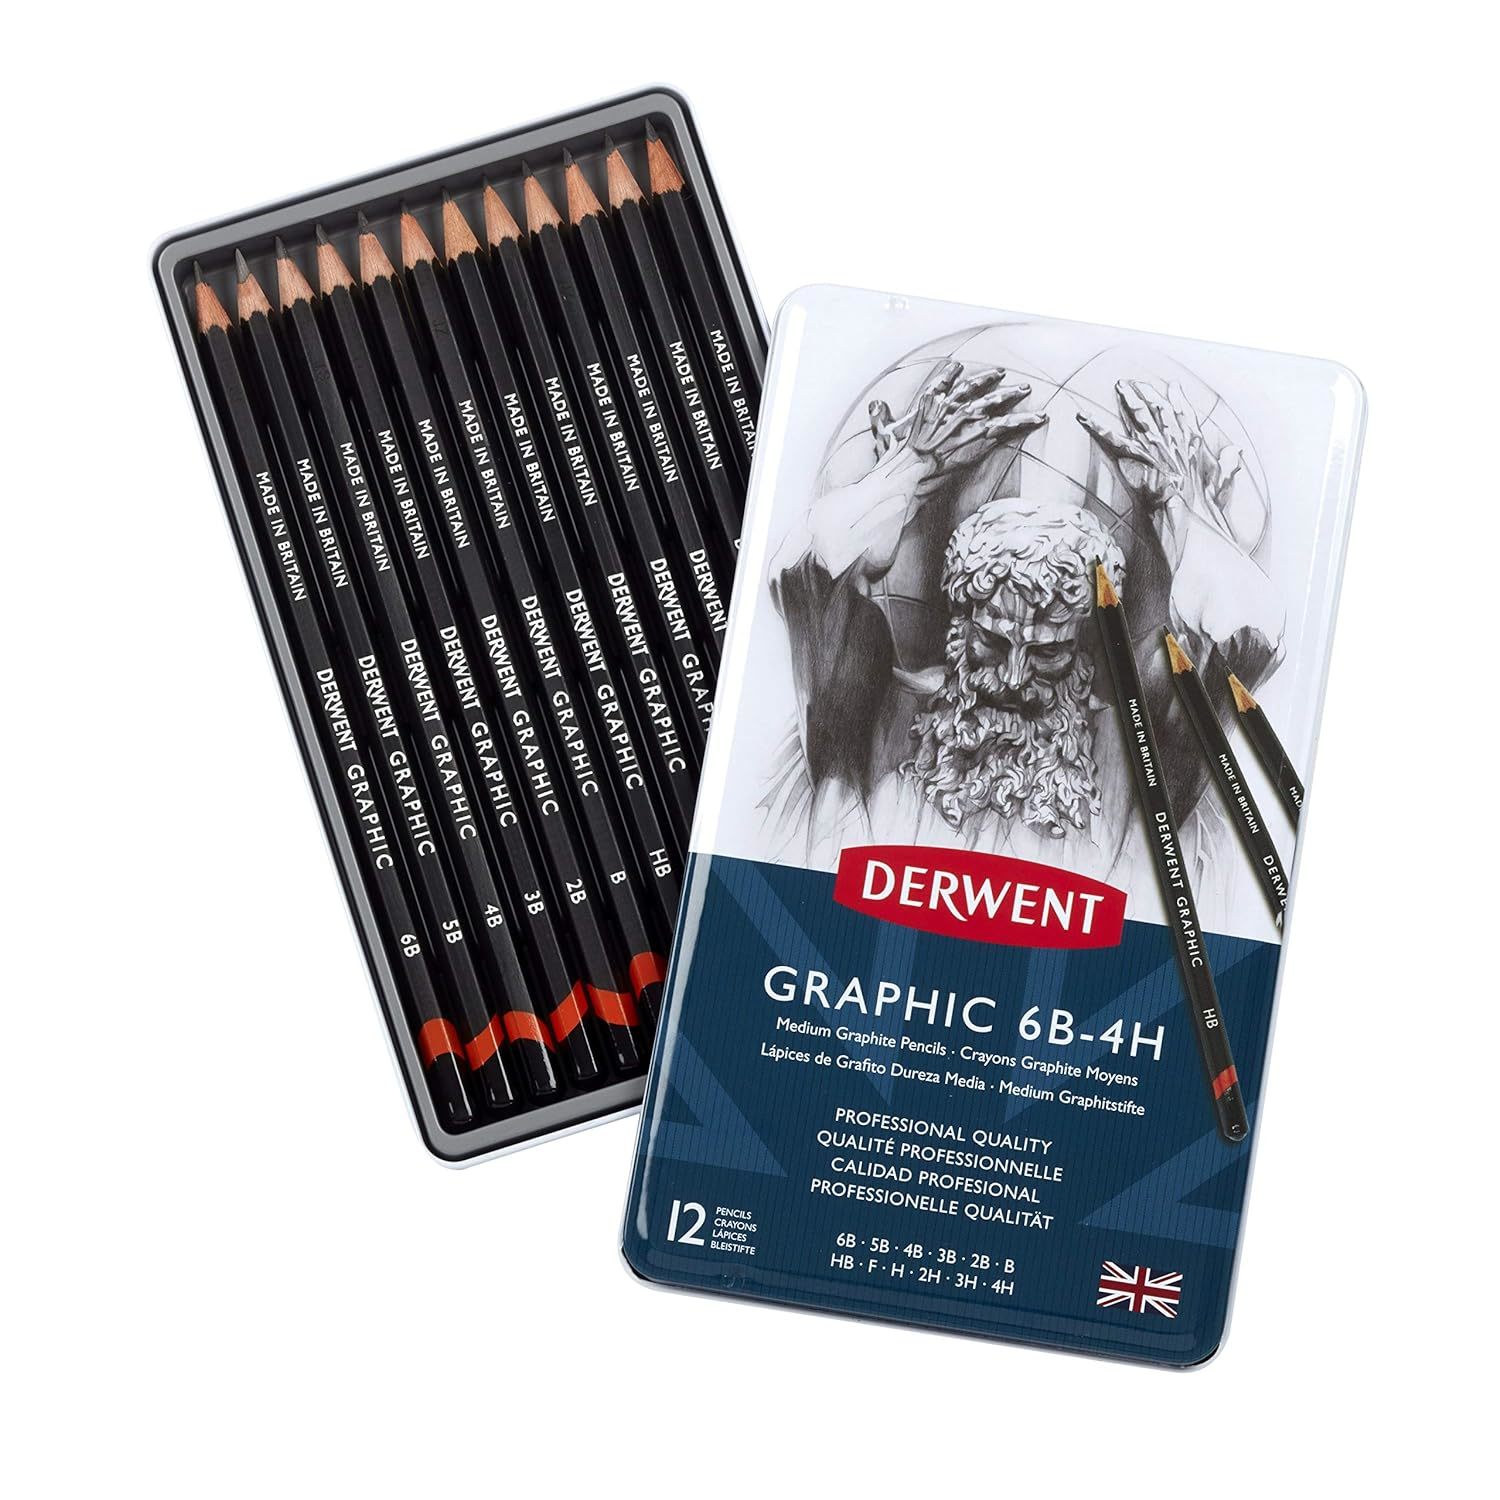 Derwent Graphic Drawing Pencils, Medium, Metal Tin, 12 Count (34214) - $33.99